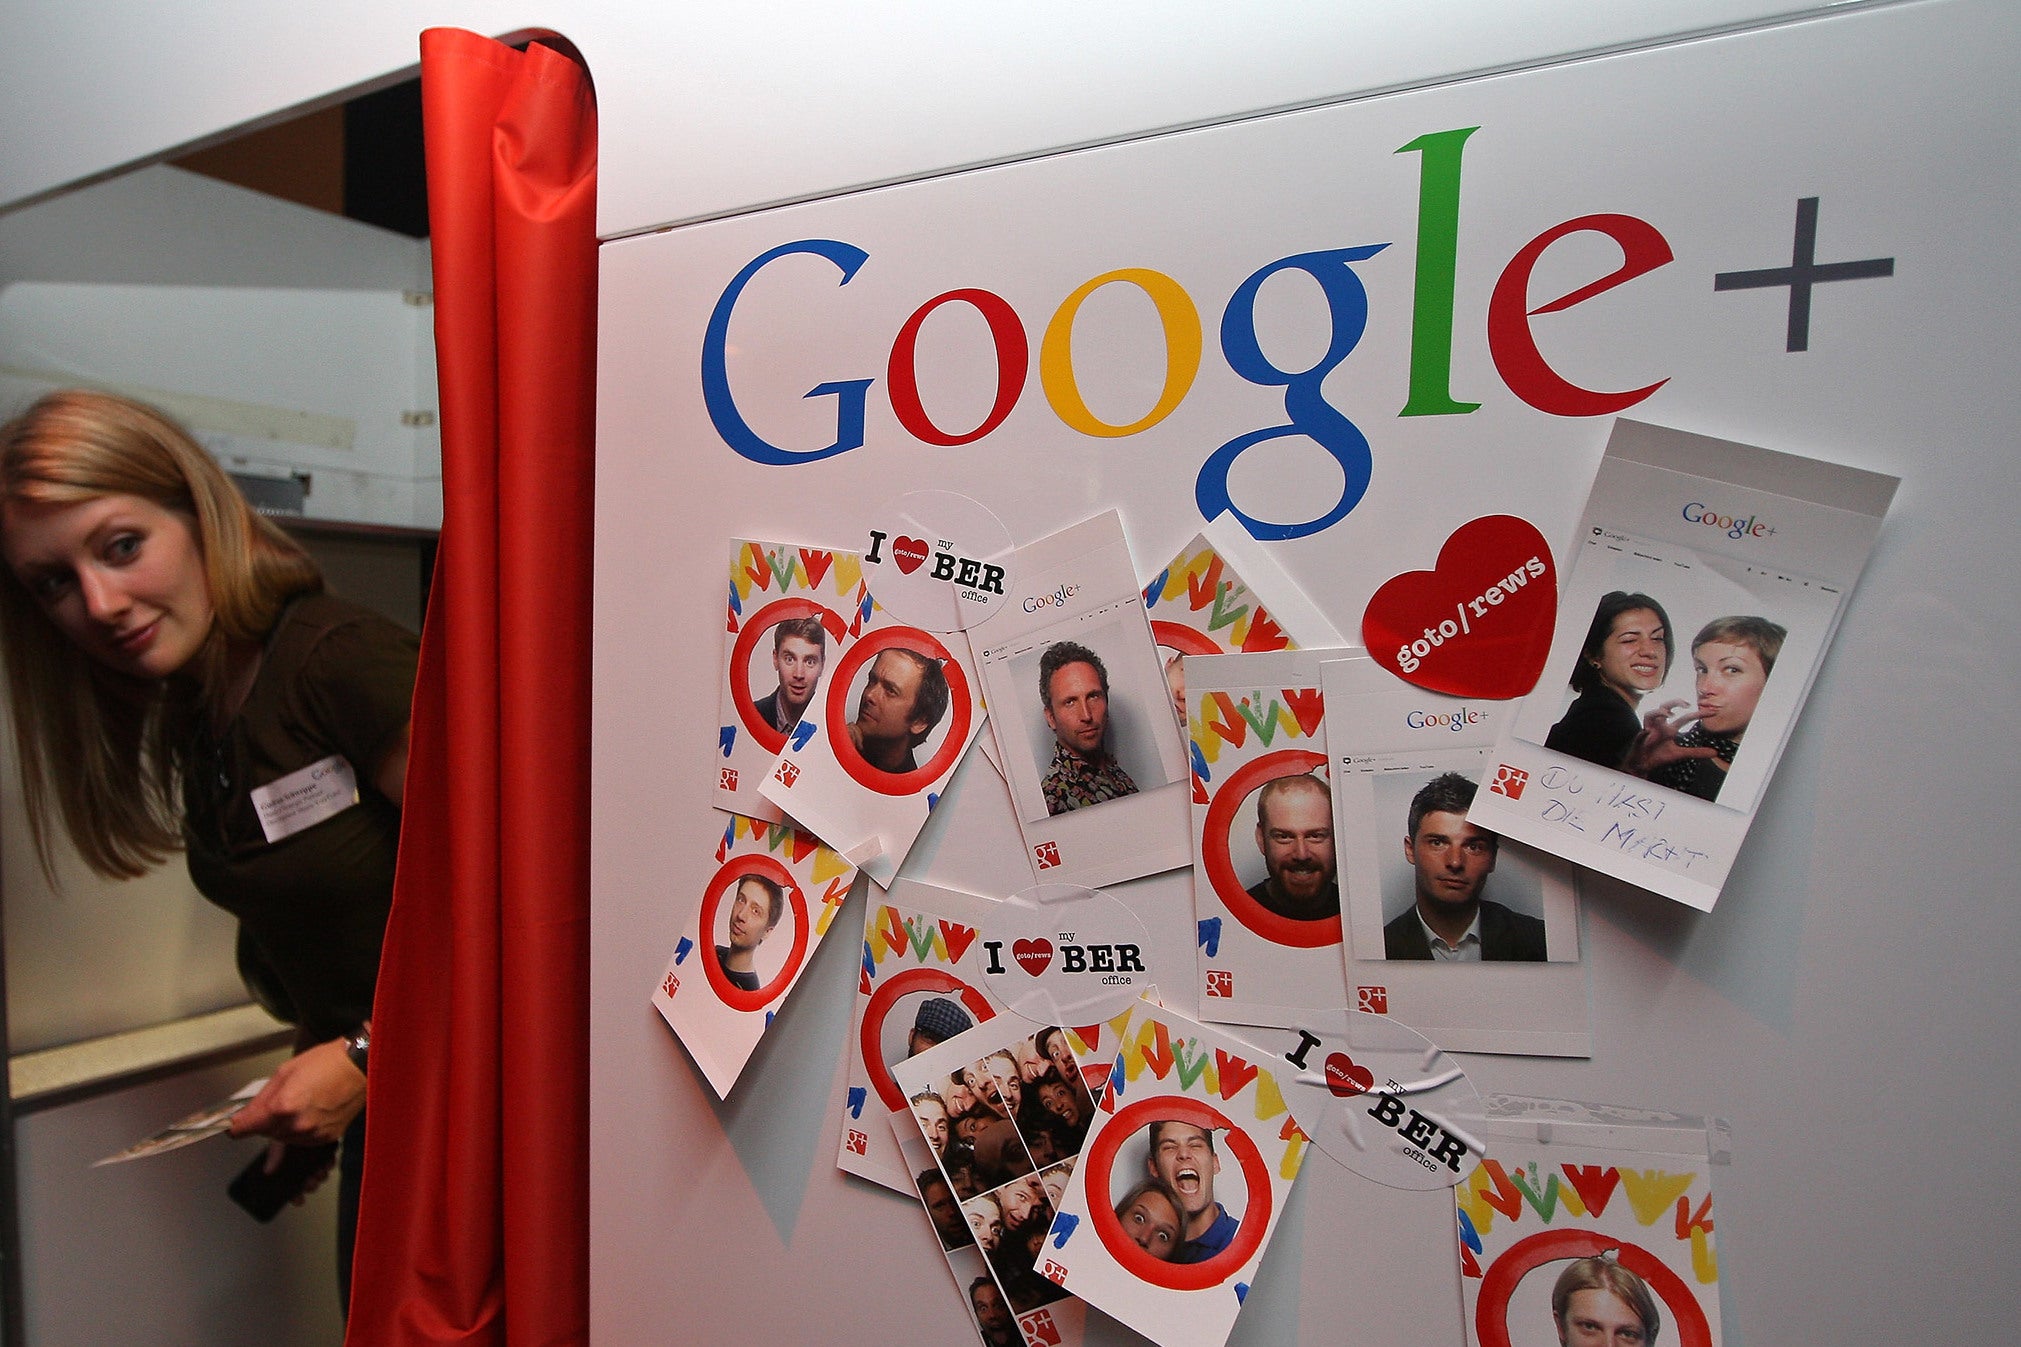 Google+ photo booth